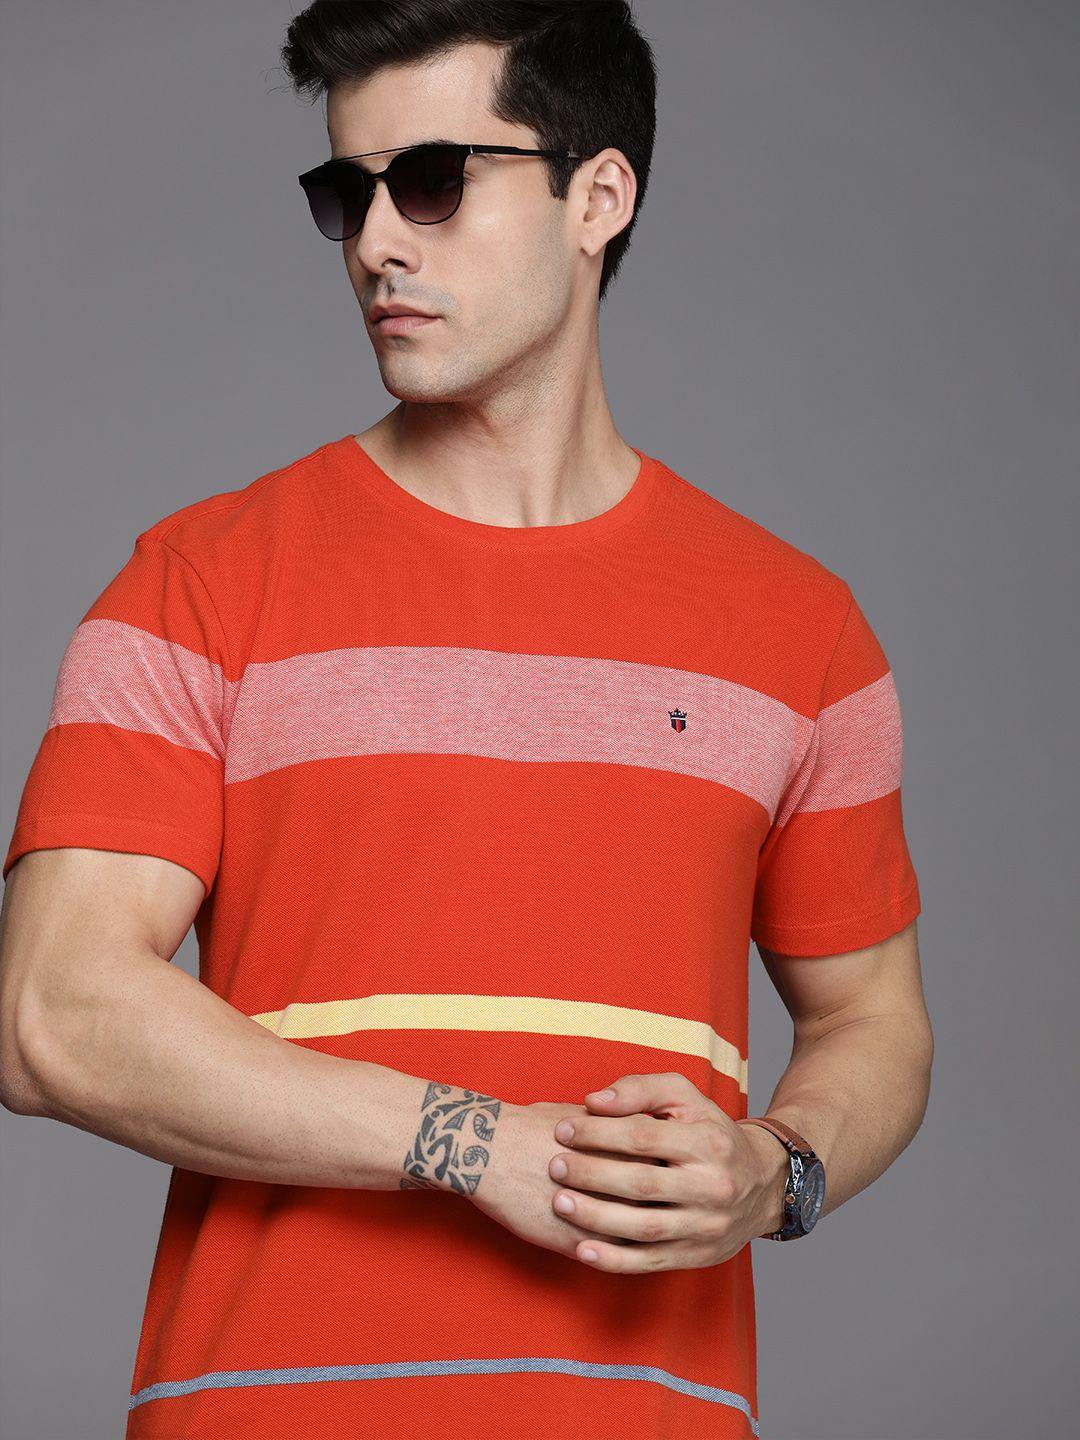 louis philippe sport men orange colourblocked pure cotton slim fit casual t-shirt